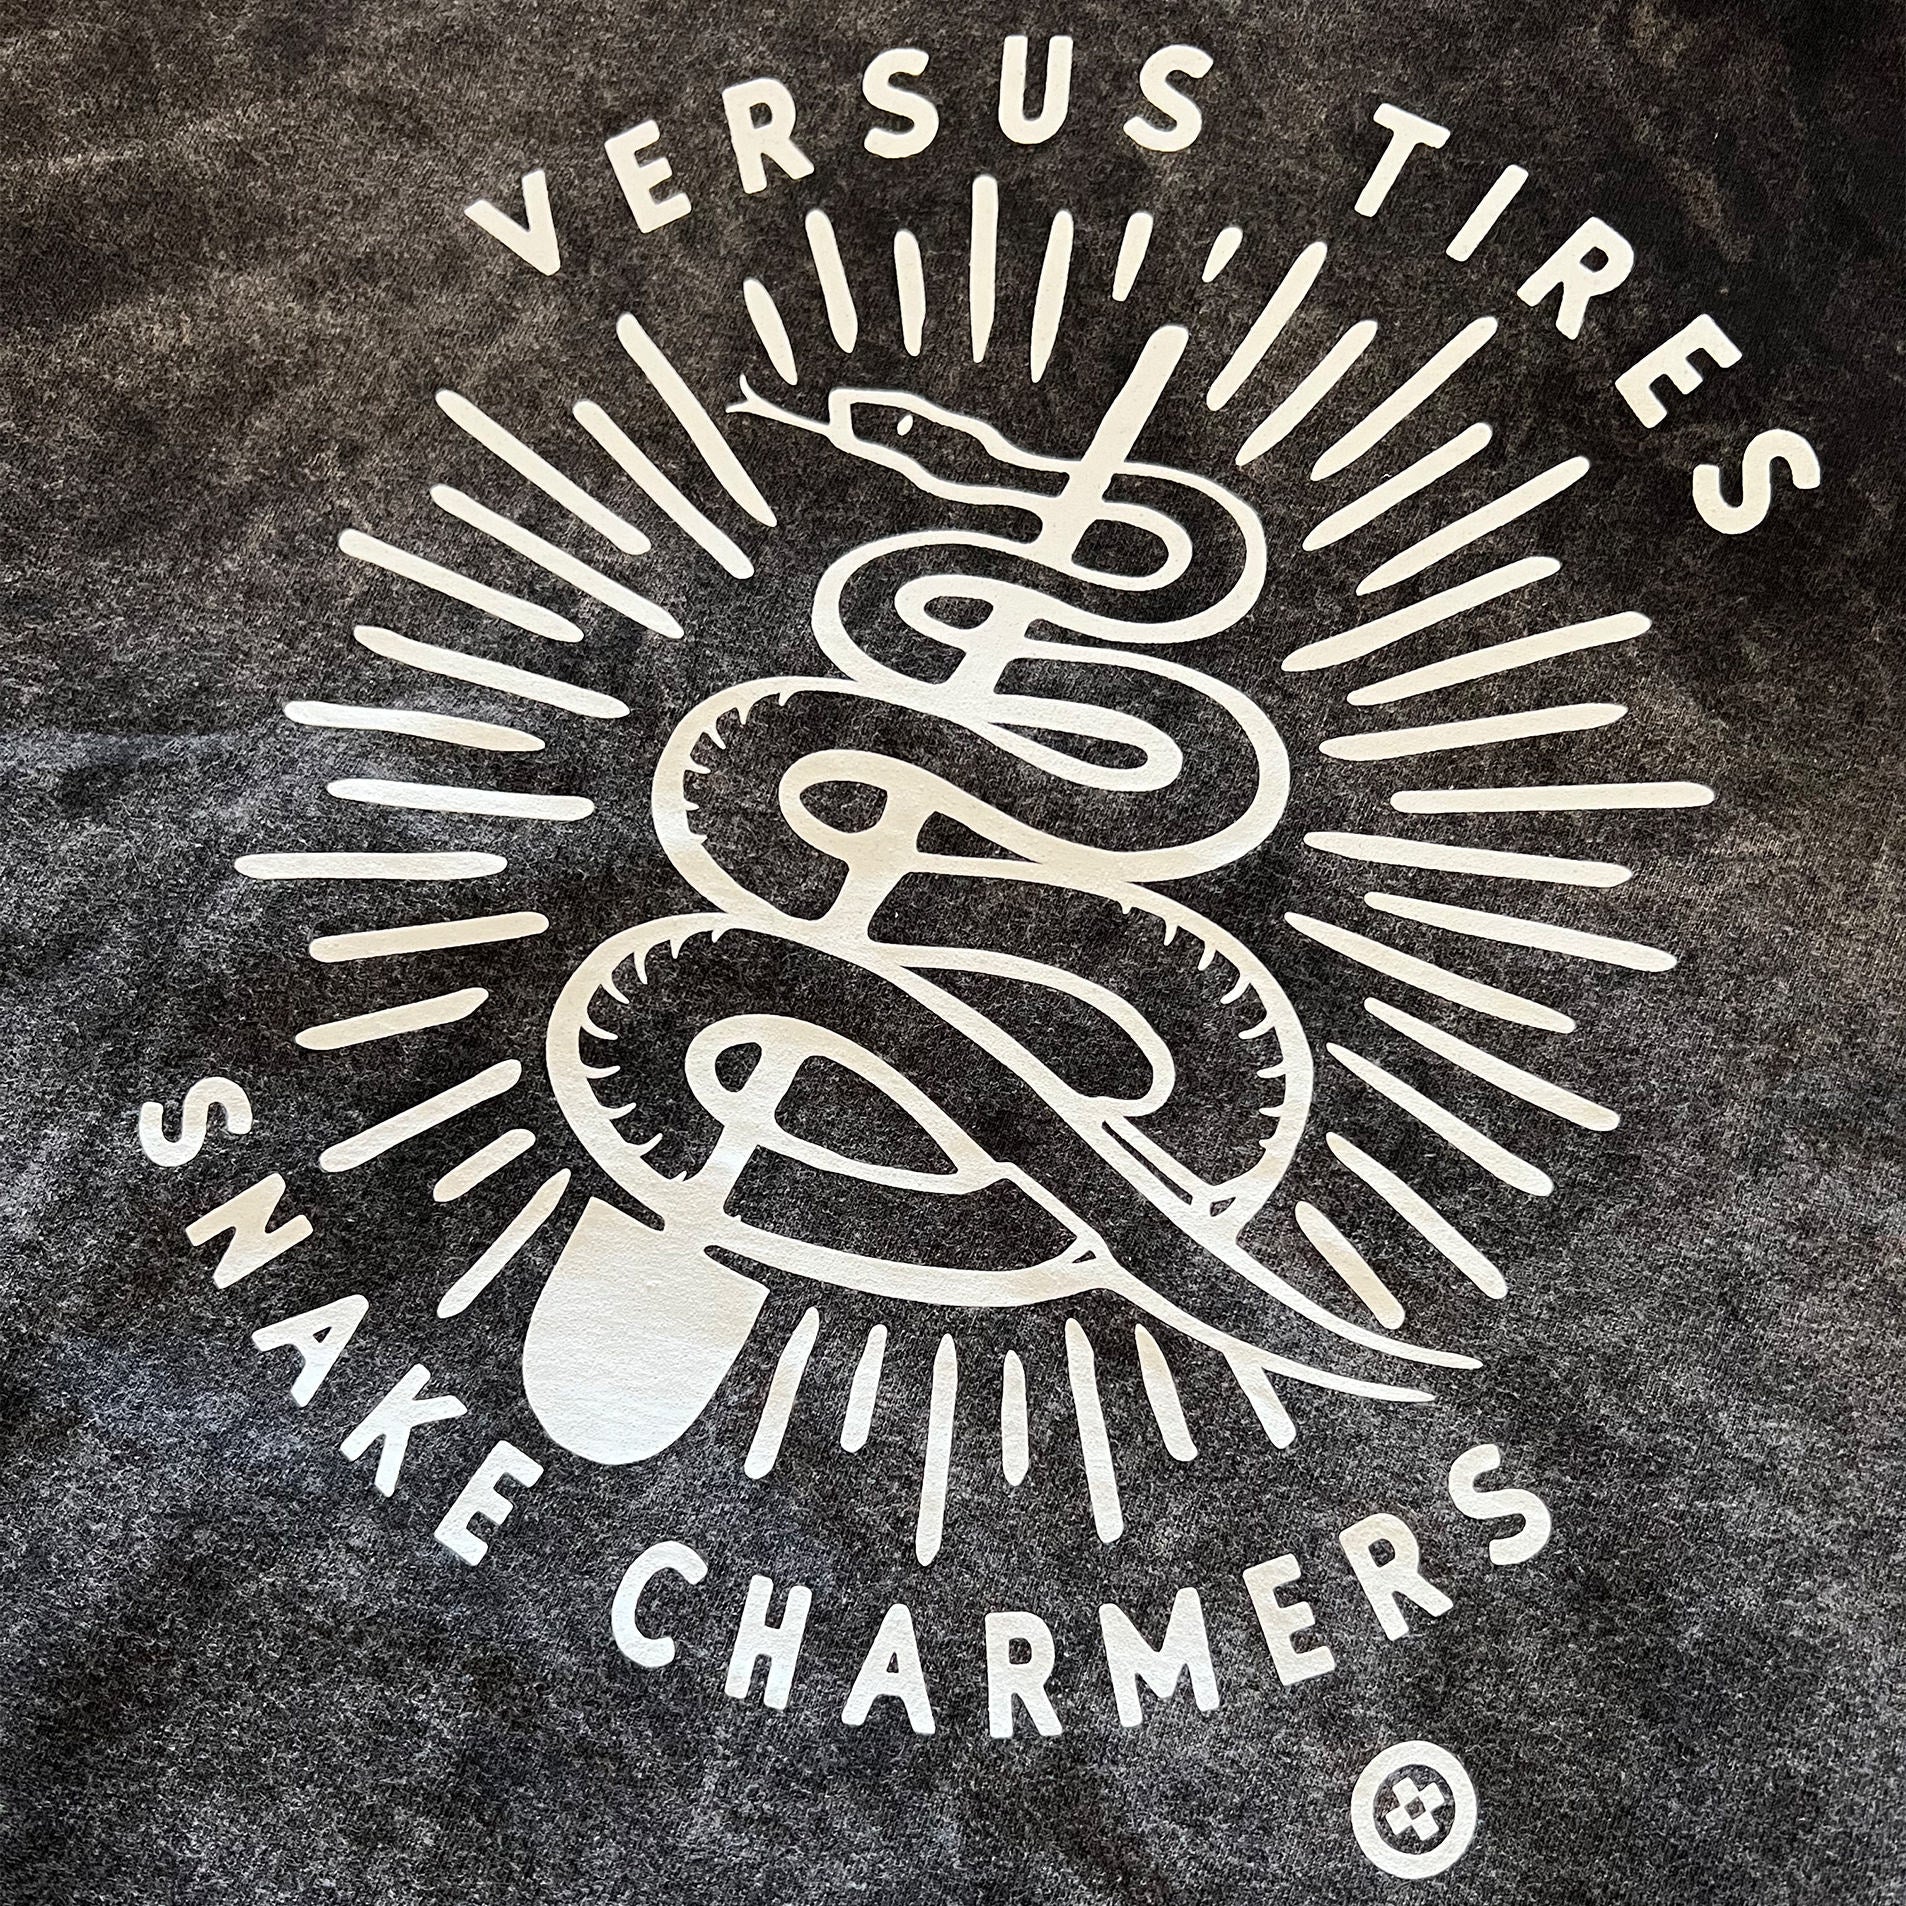 Versus Tires mineral wash hooded sweatshirt with Snakecharmer Design - back print detail